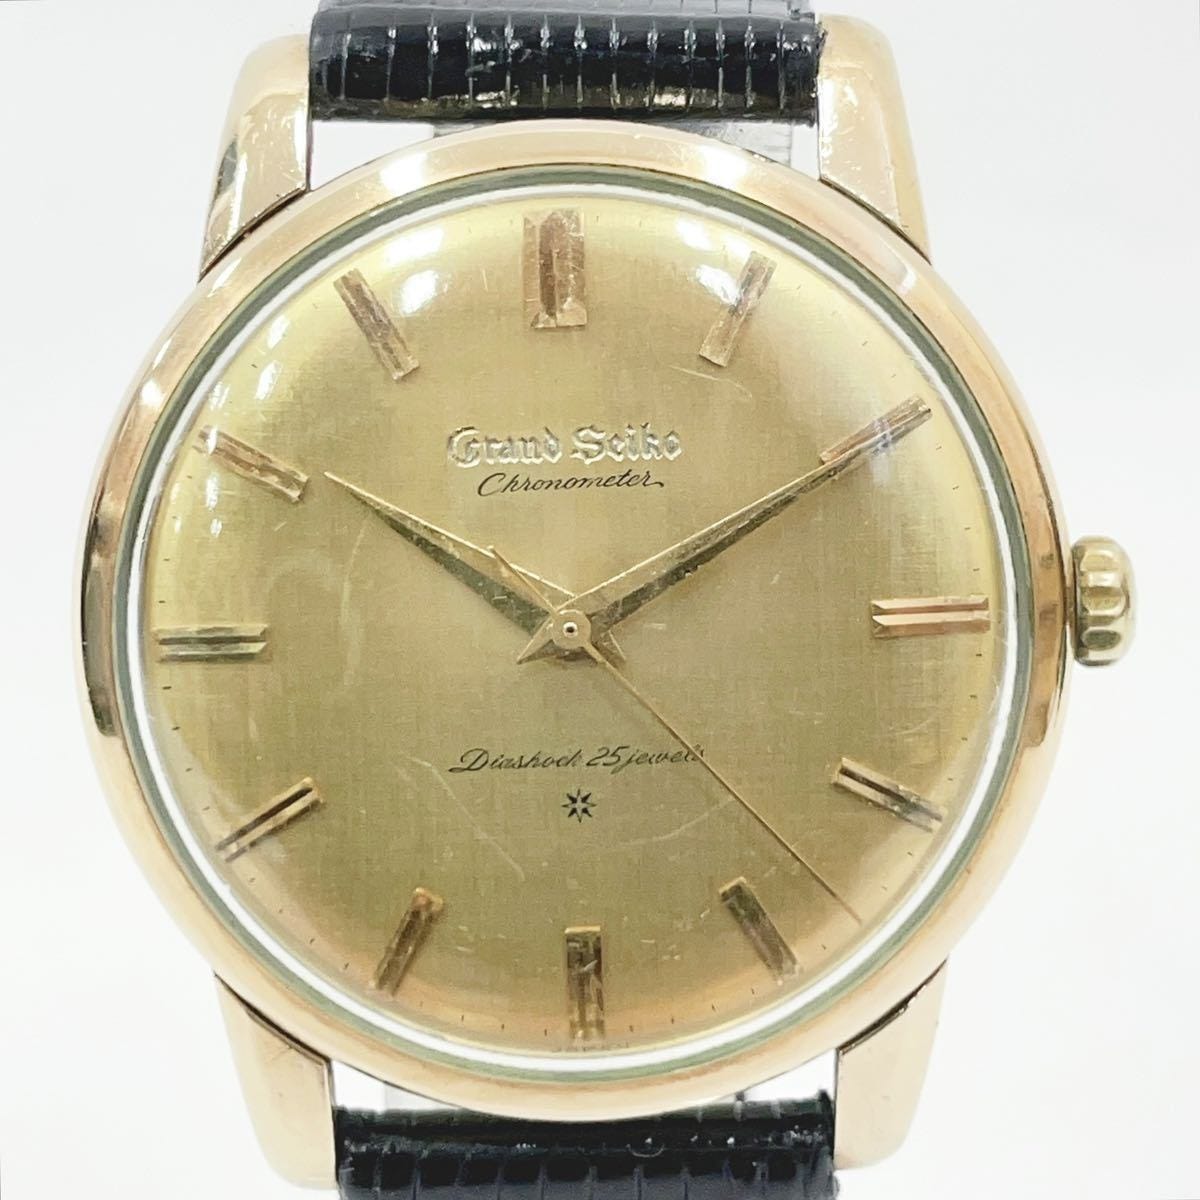 Grand Seiko Grand Seiko Chronometer chronometer 3 hands manual winding men's wristwatch 25 stone lion medal RA0625○